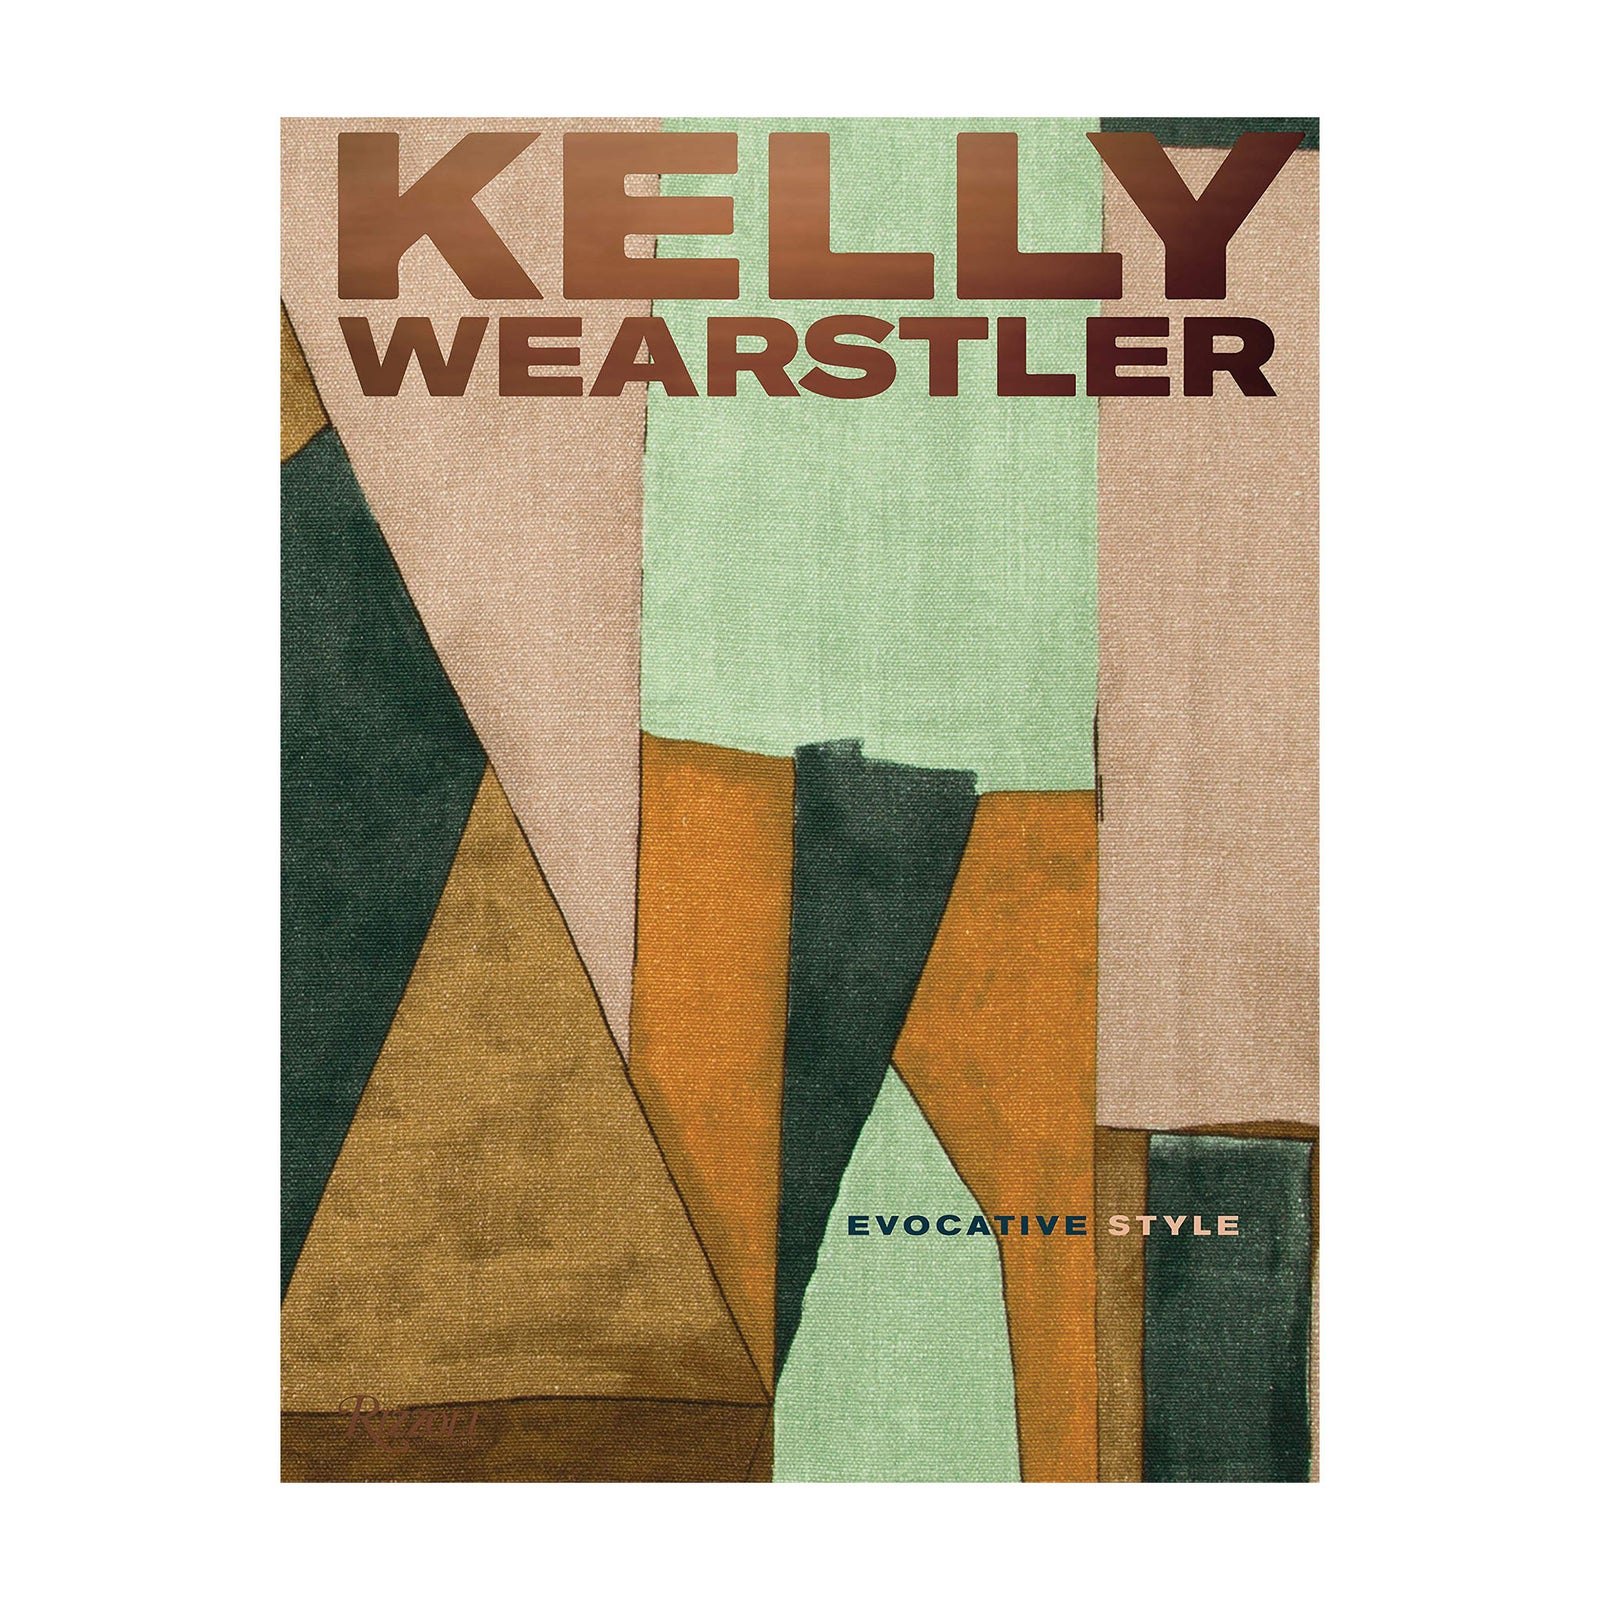 Kelly Wearstler: Evocative Style